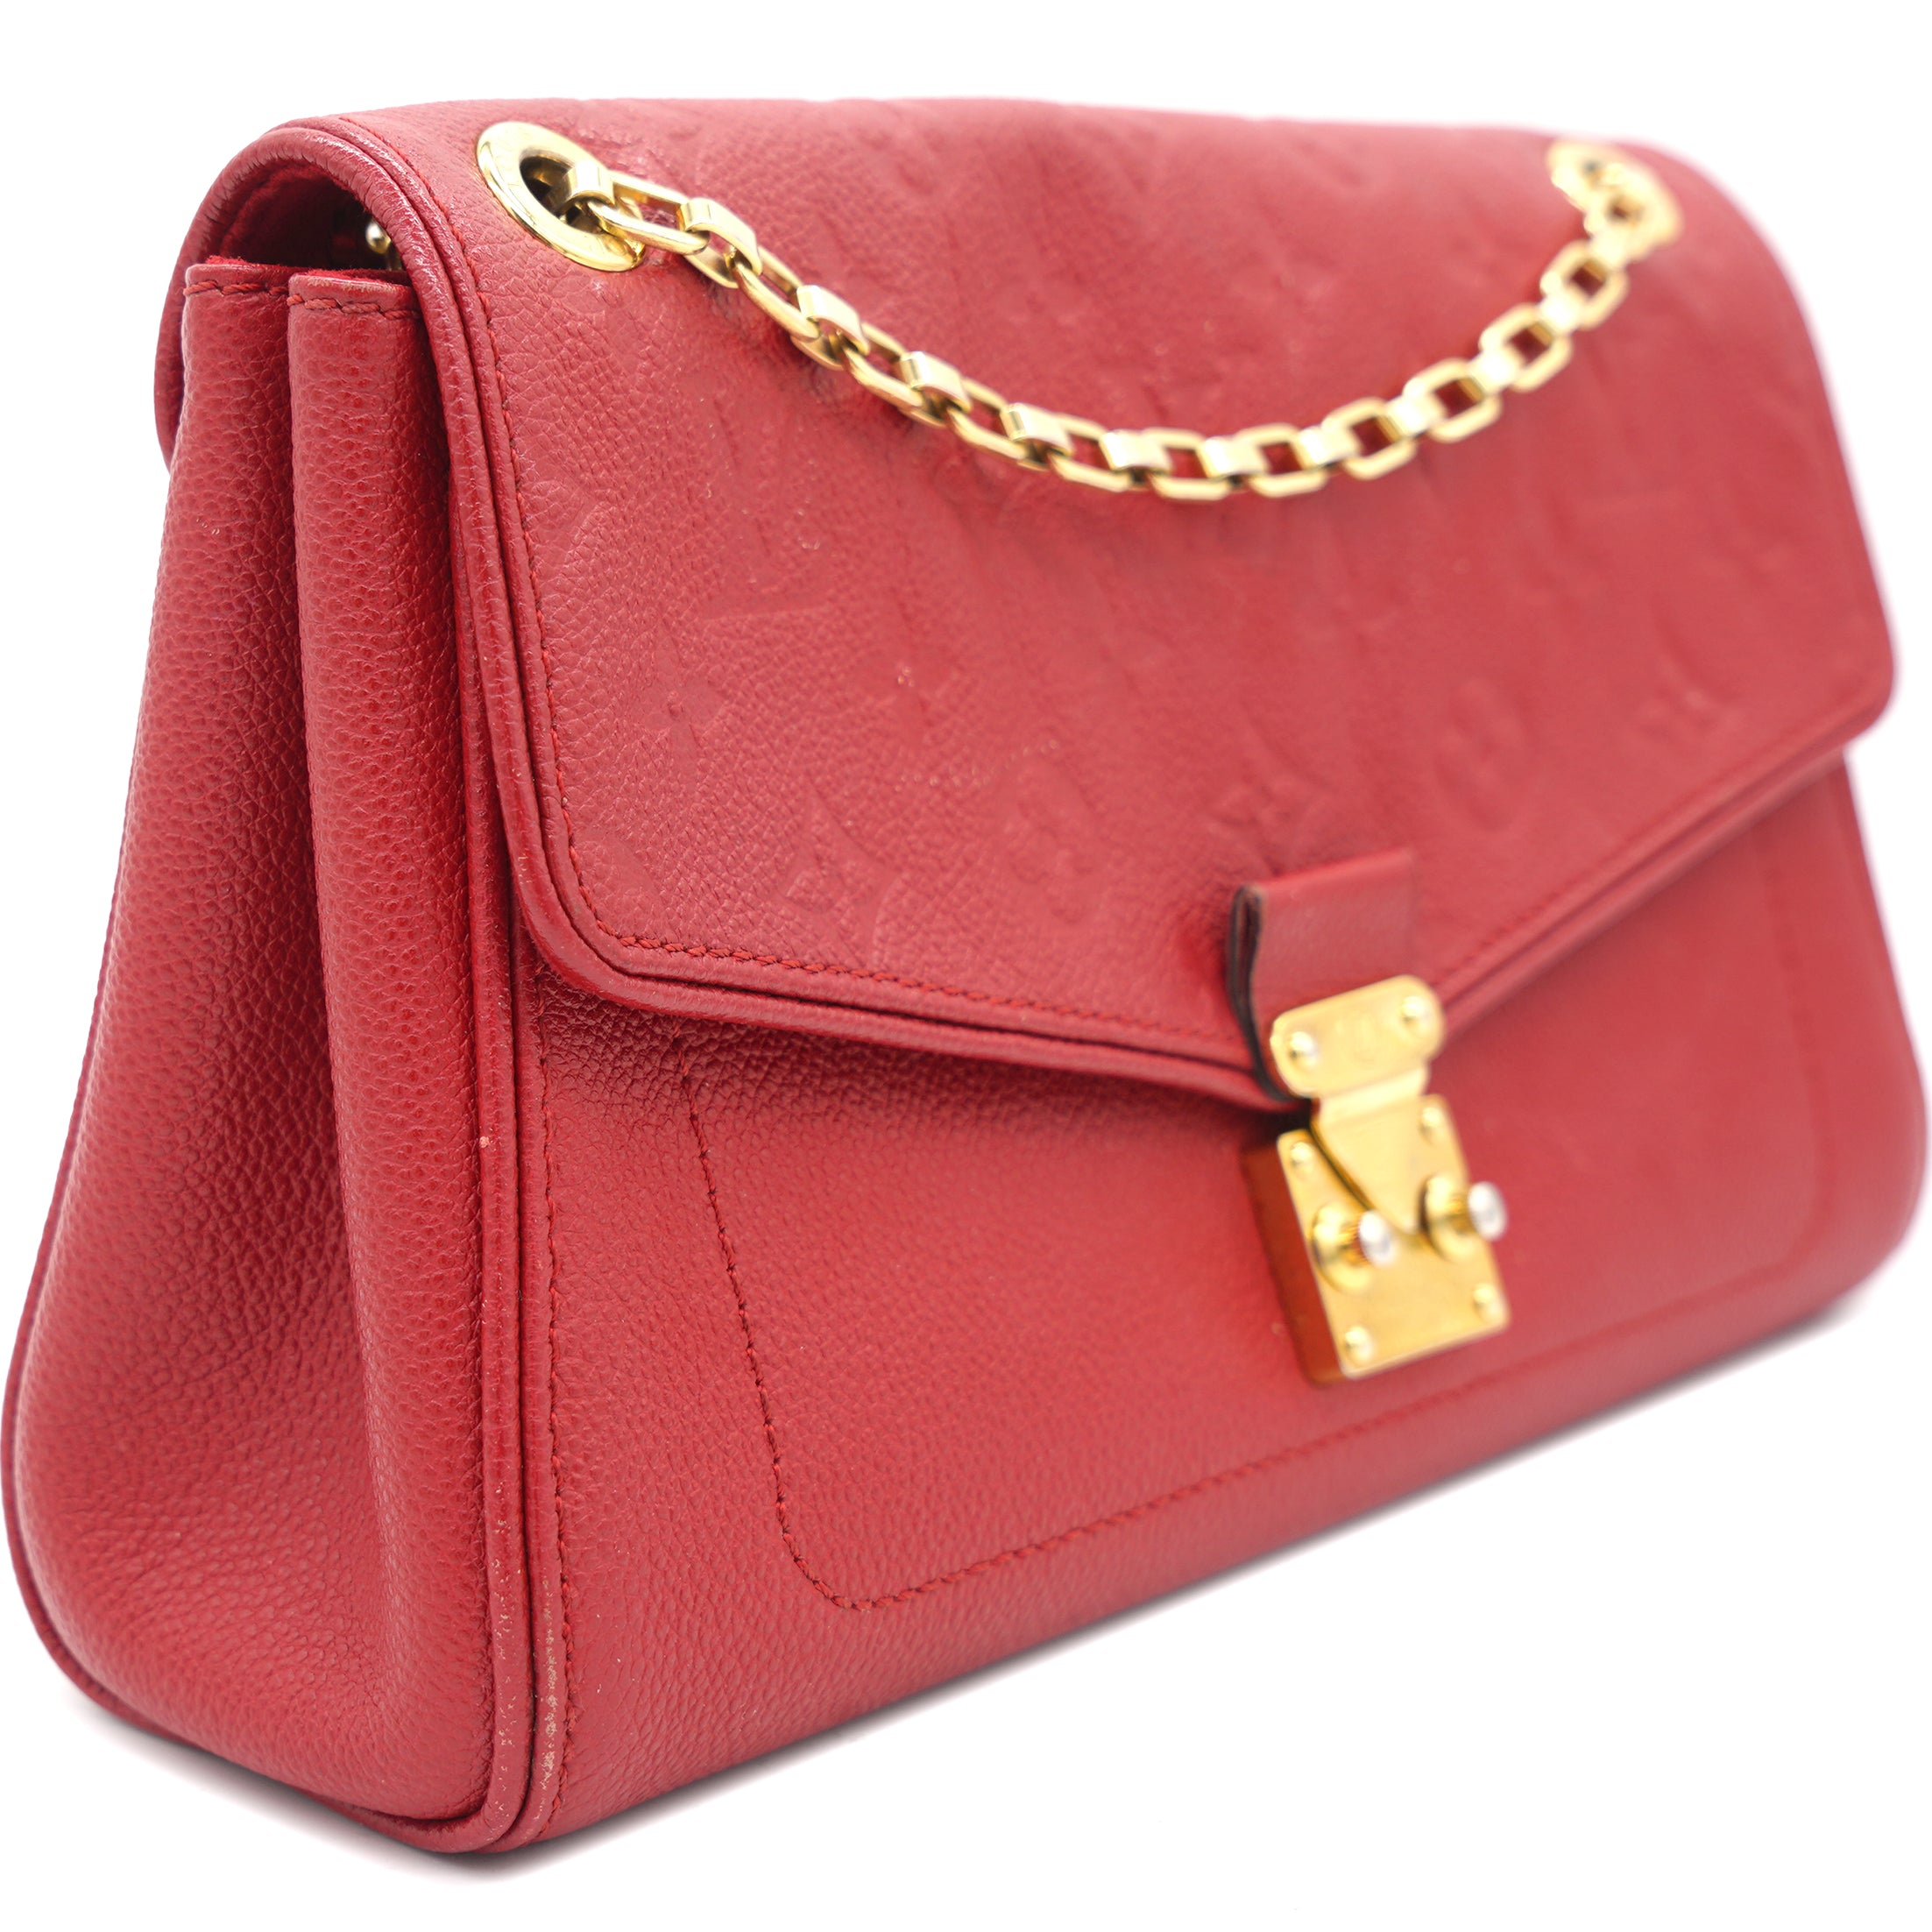 Buy Louis Vuitton Saint Germain Cherry Red Pm Handbag